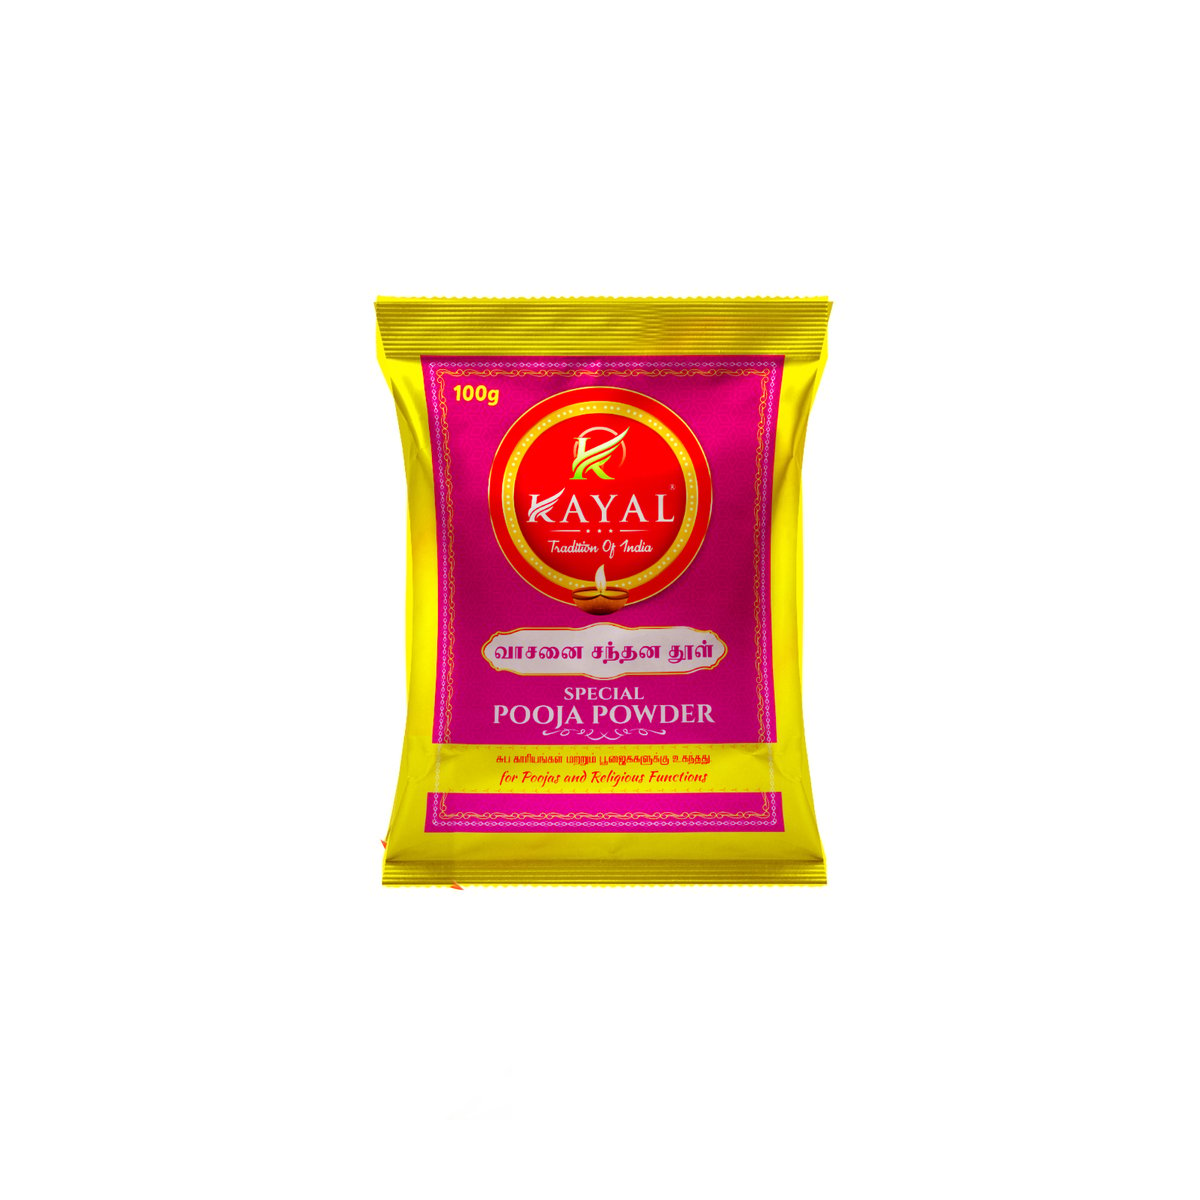 Kayal Special Pooja Powder 100g